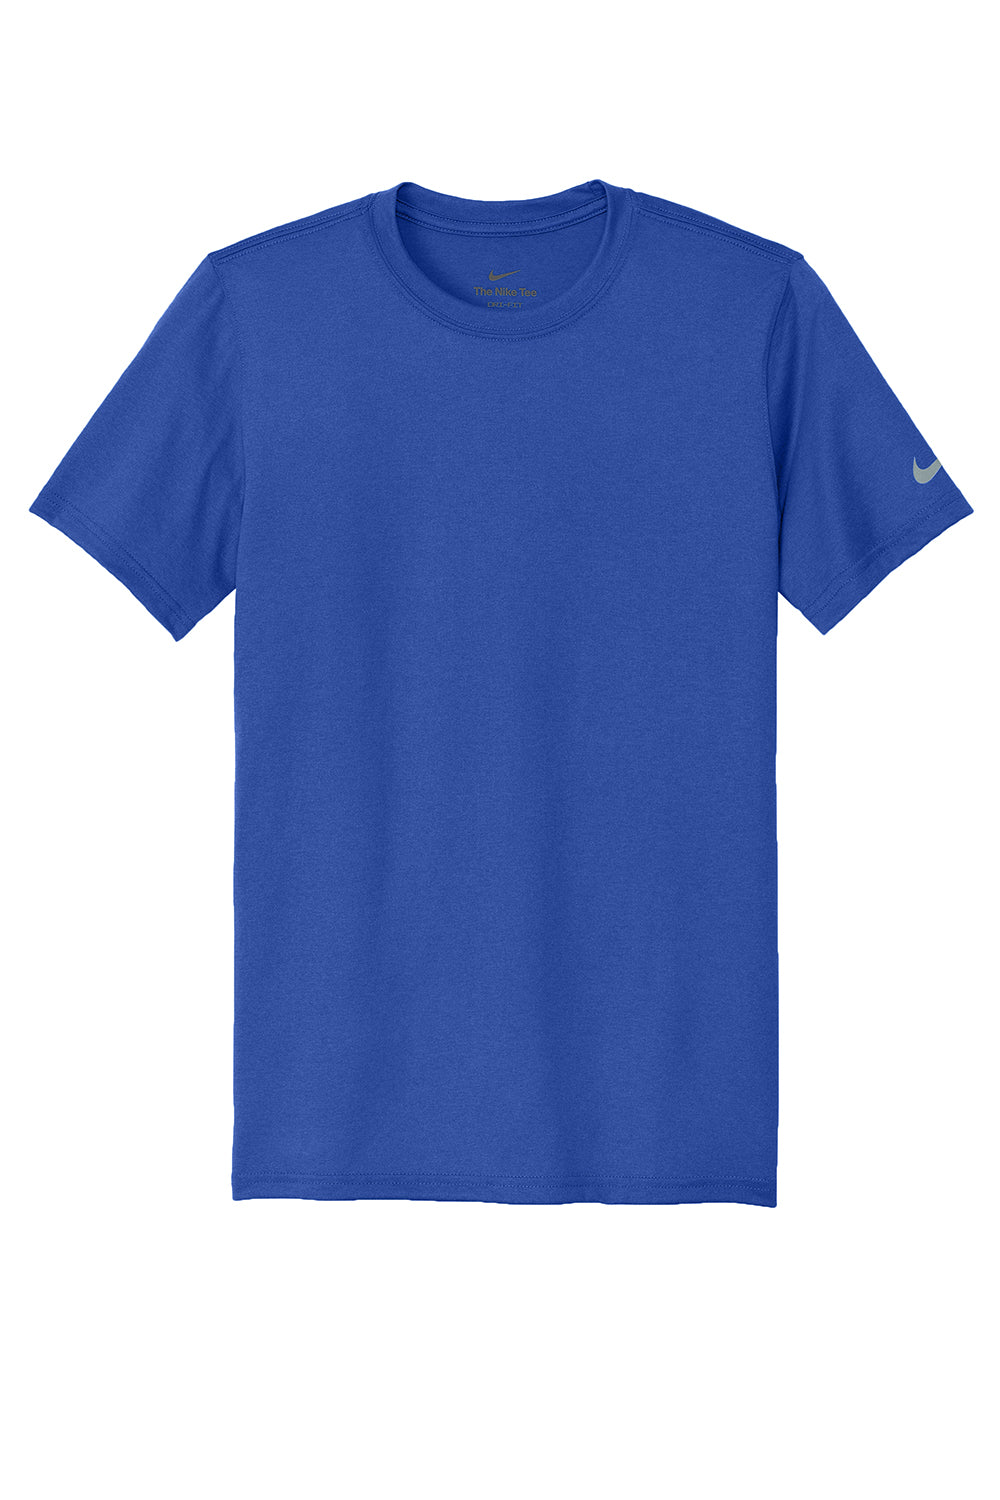 Nike NKDX8730 Mens rLegend Dri-Fit Moisture Wicking Short Sleeve Crewneck T-Shirt Game Royal Blue Flat Front